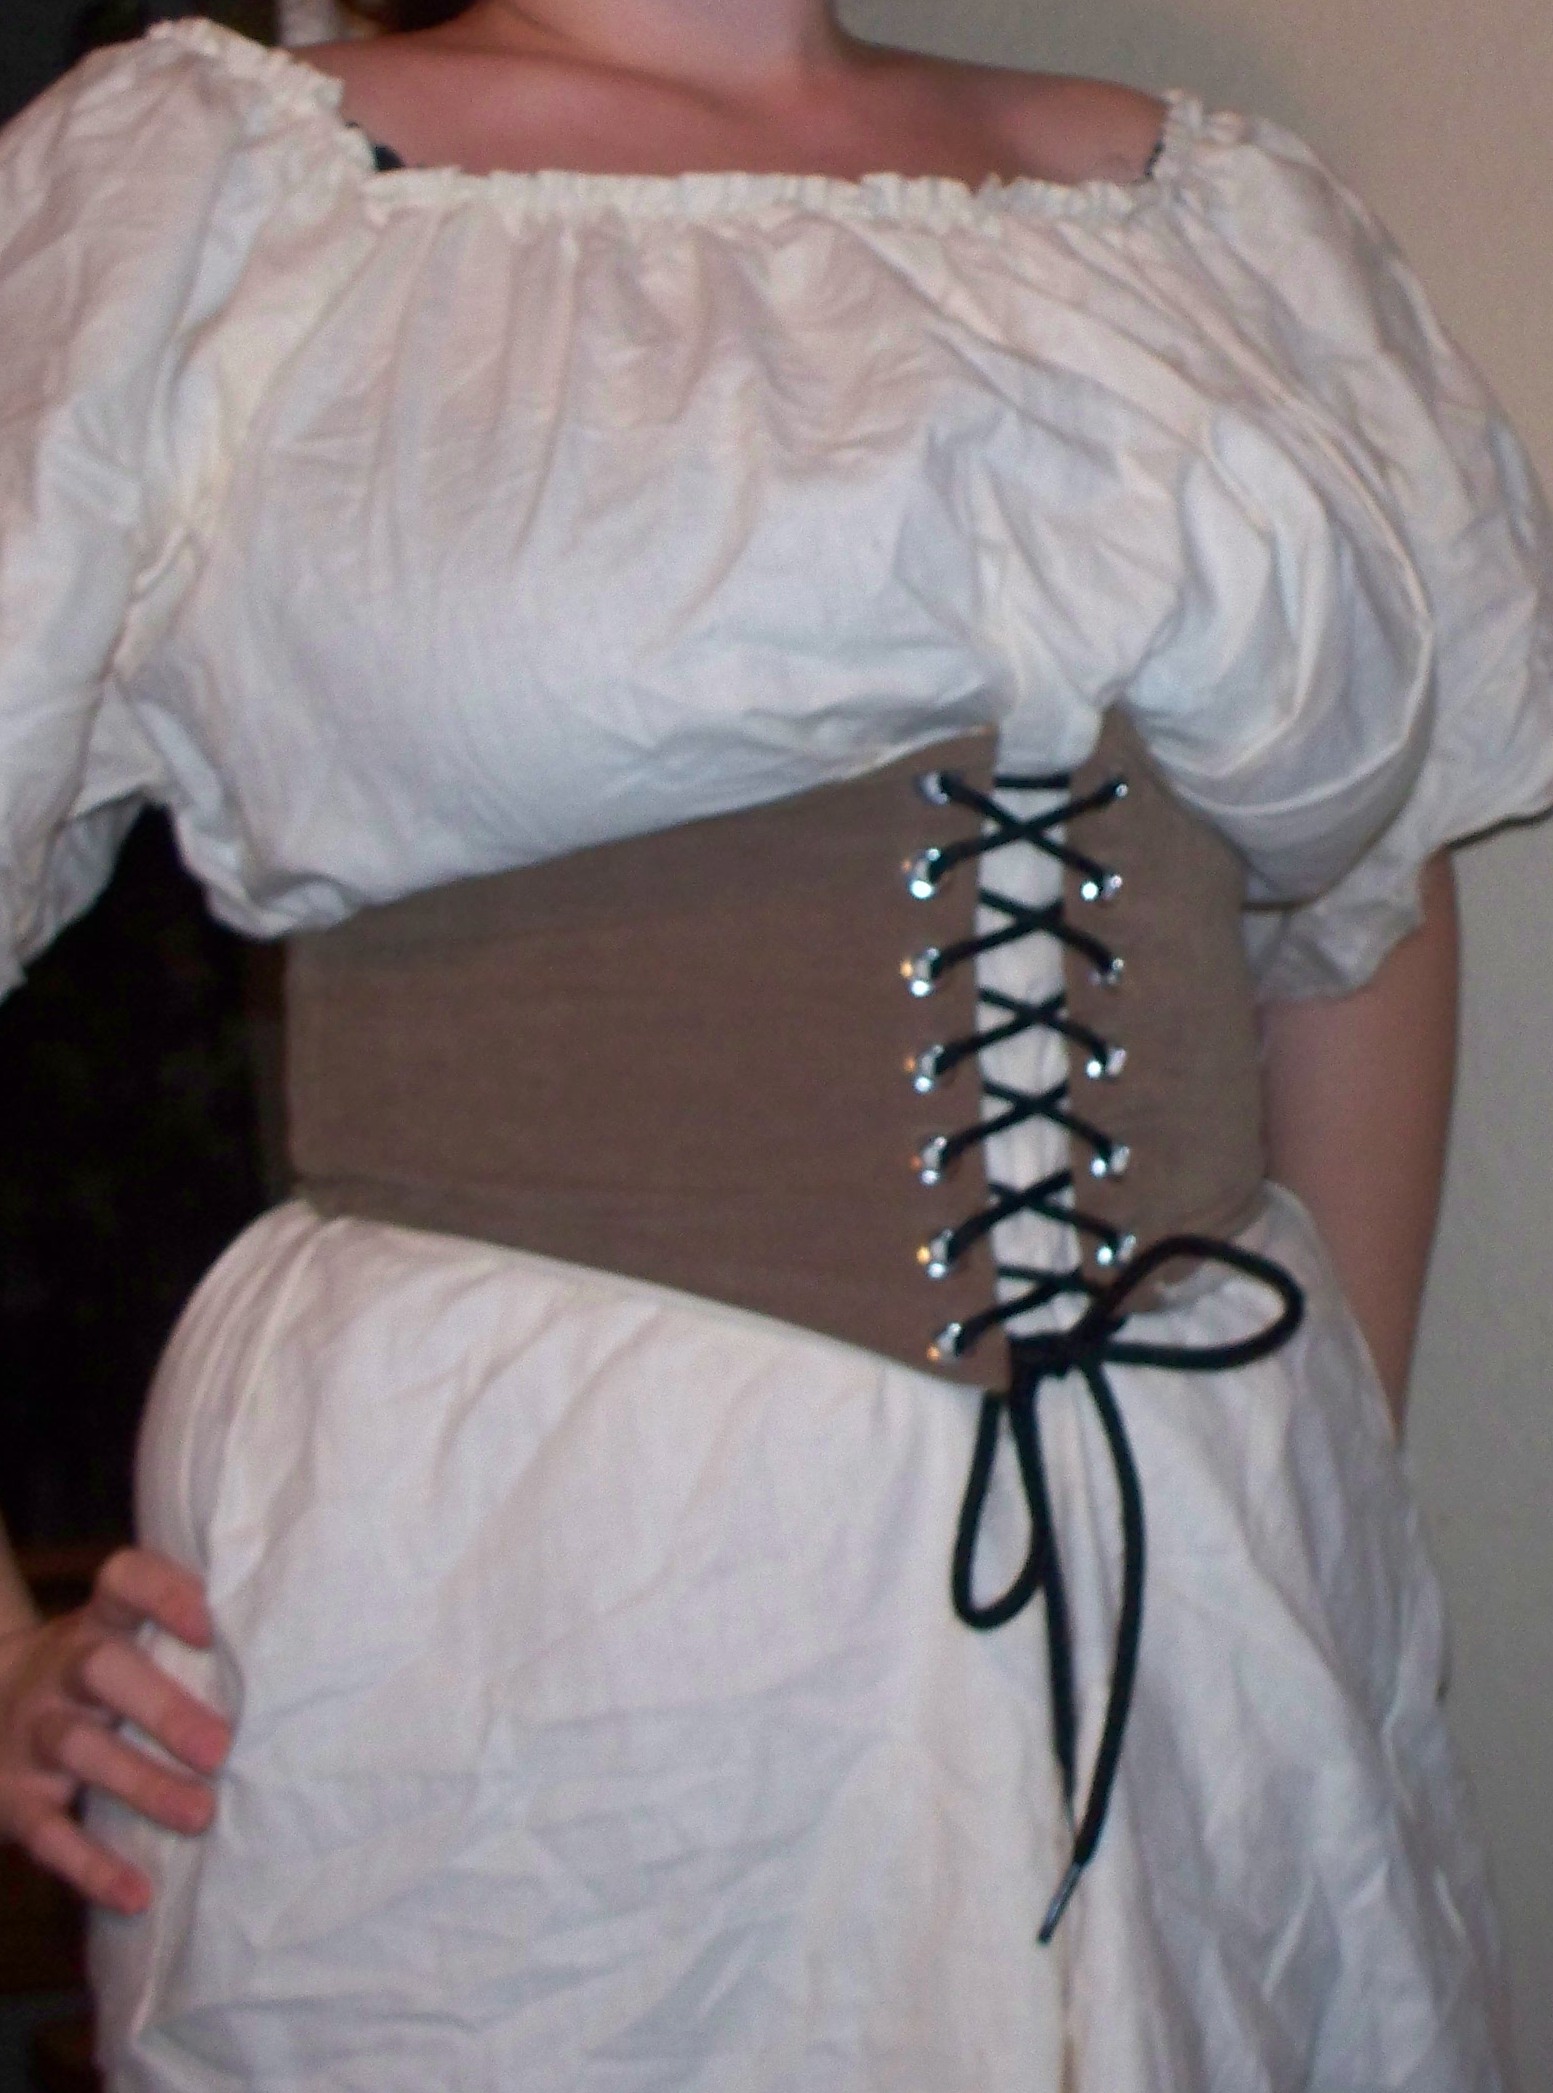 swiss-waist-corset-belt-sewing-projects-burdastyle